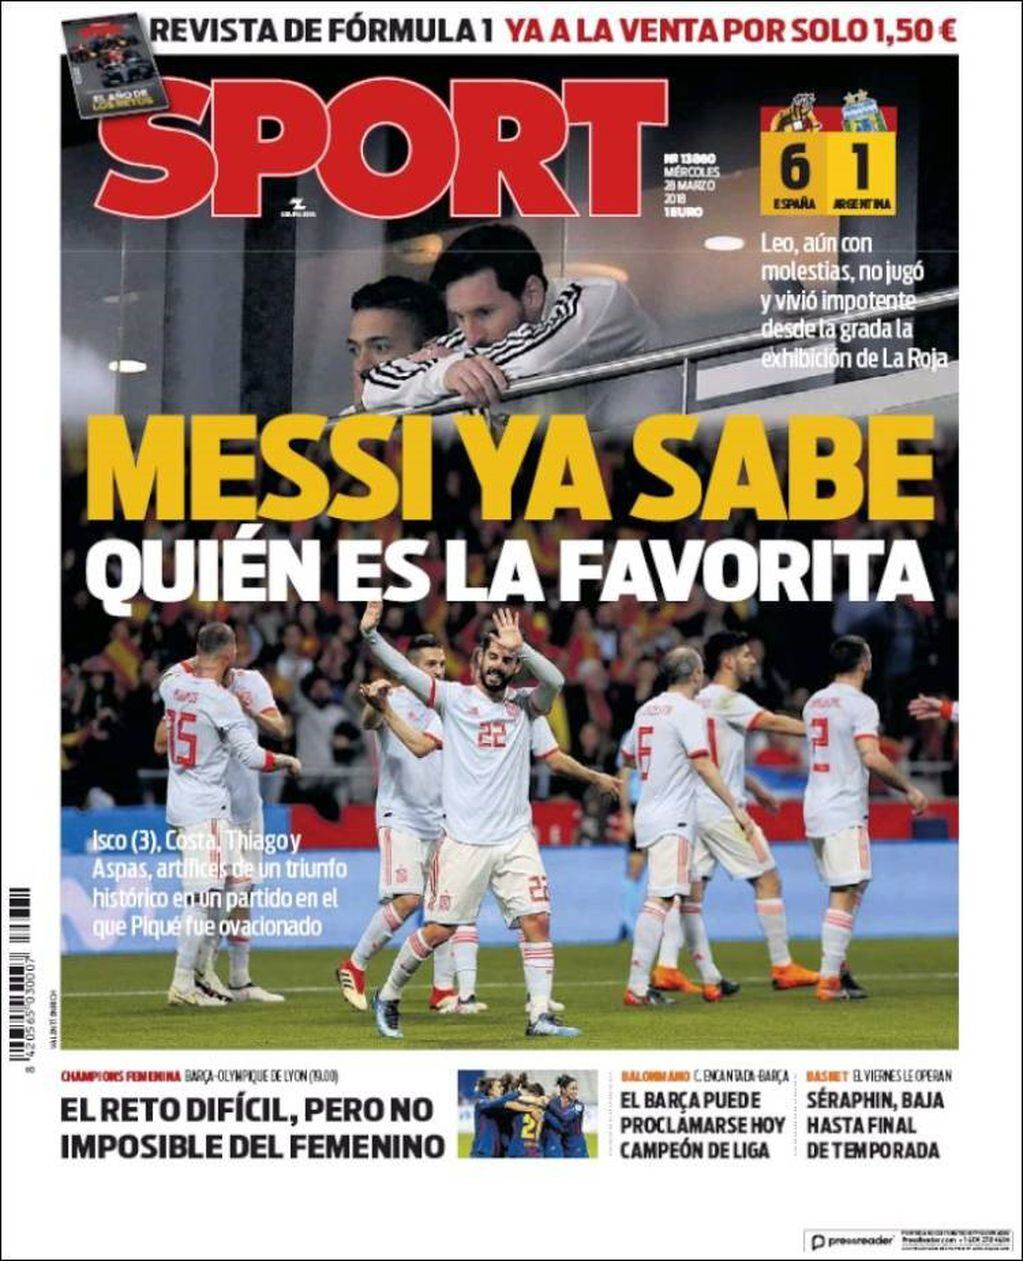 La prensa española se burla del papelón que hizo la Selección Argentina ante la "Furia Roja". Fotos: Kiosco.net